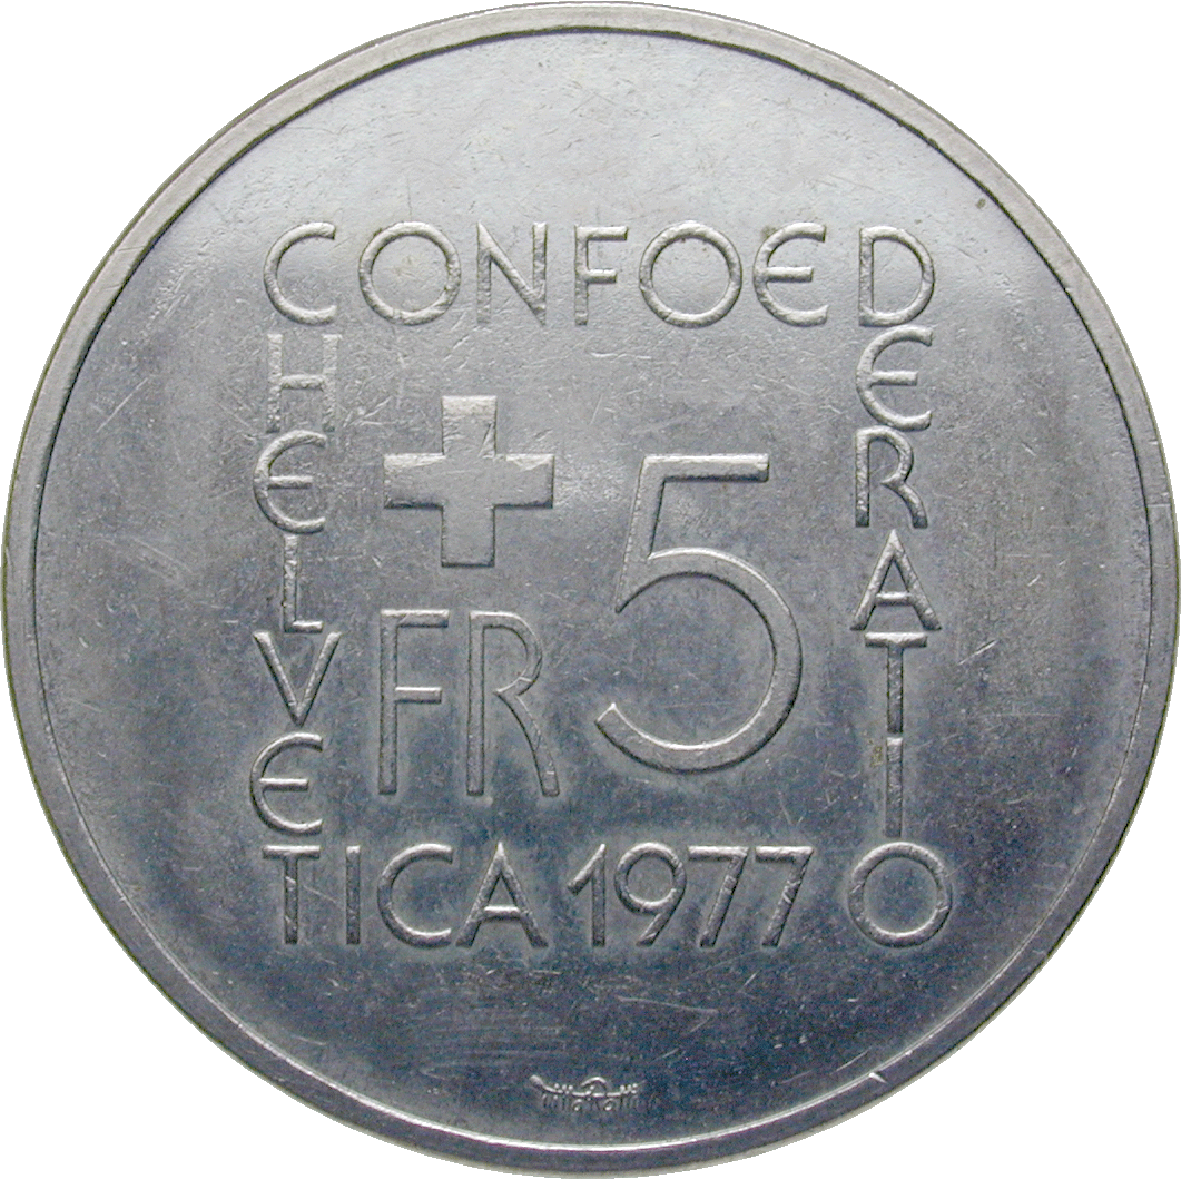 Schweizerische Eidgenossenschaft, 5 Franken 1977 (reverse)